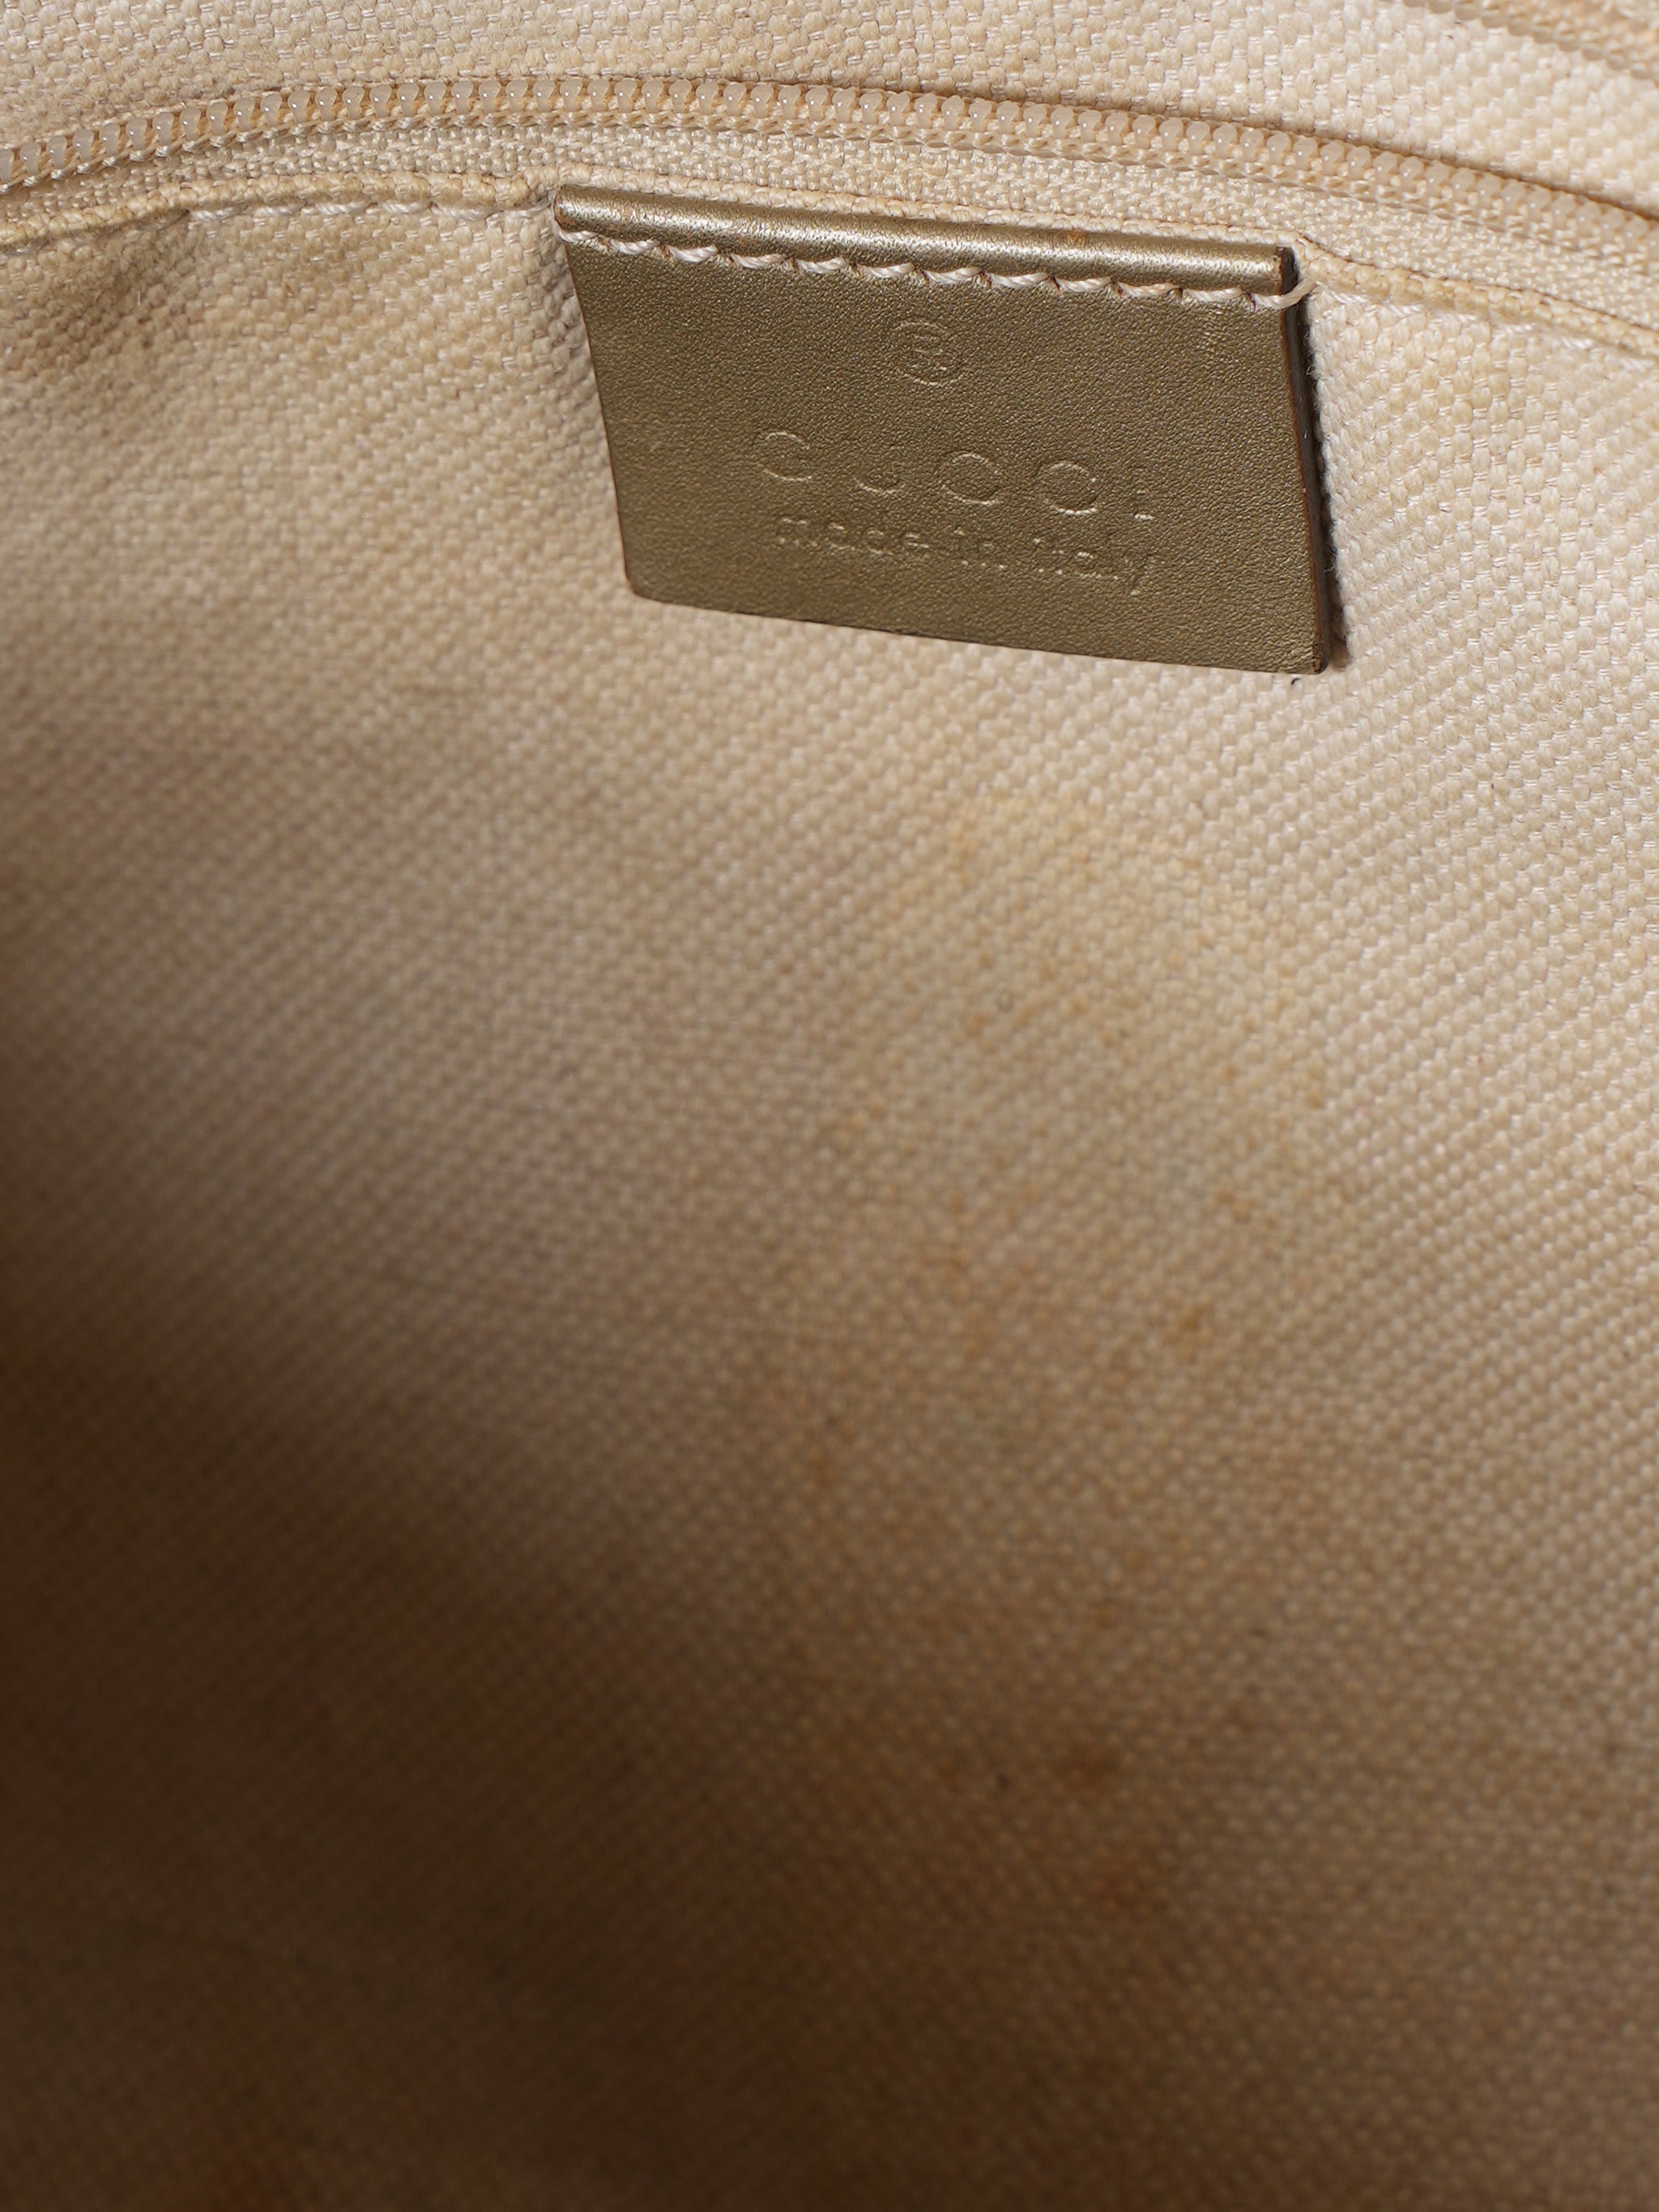 Gucci Monogram Gold Sukey Bag